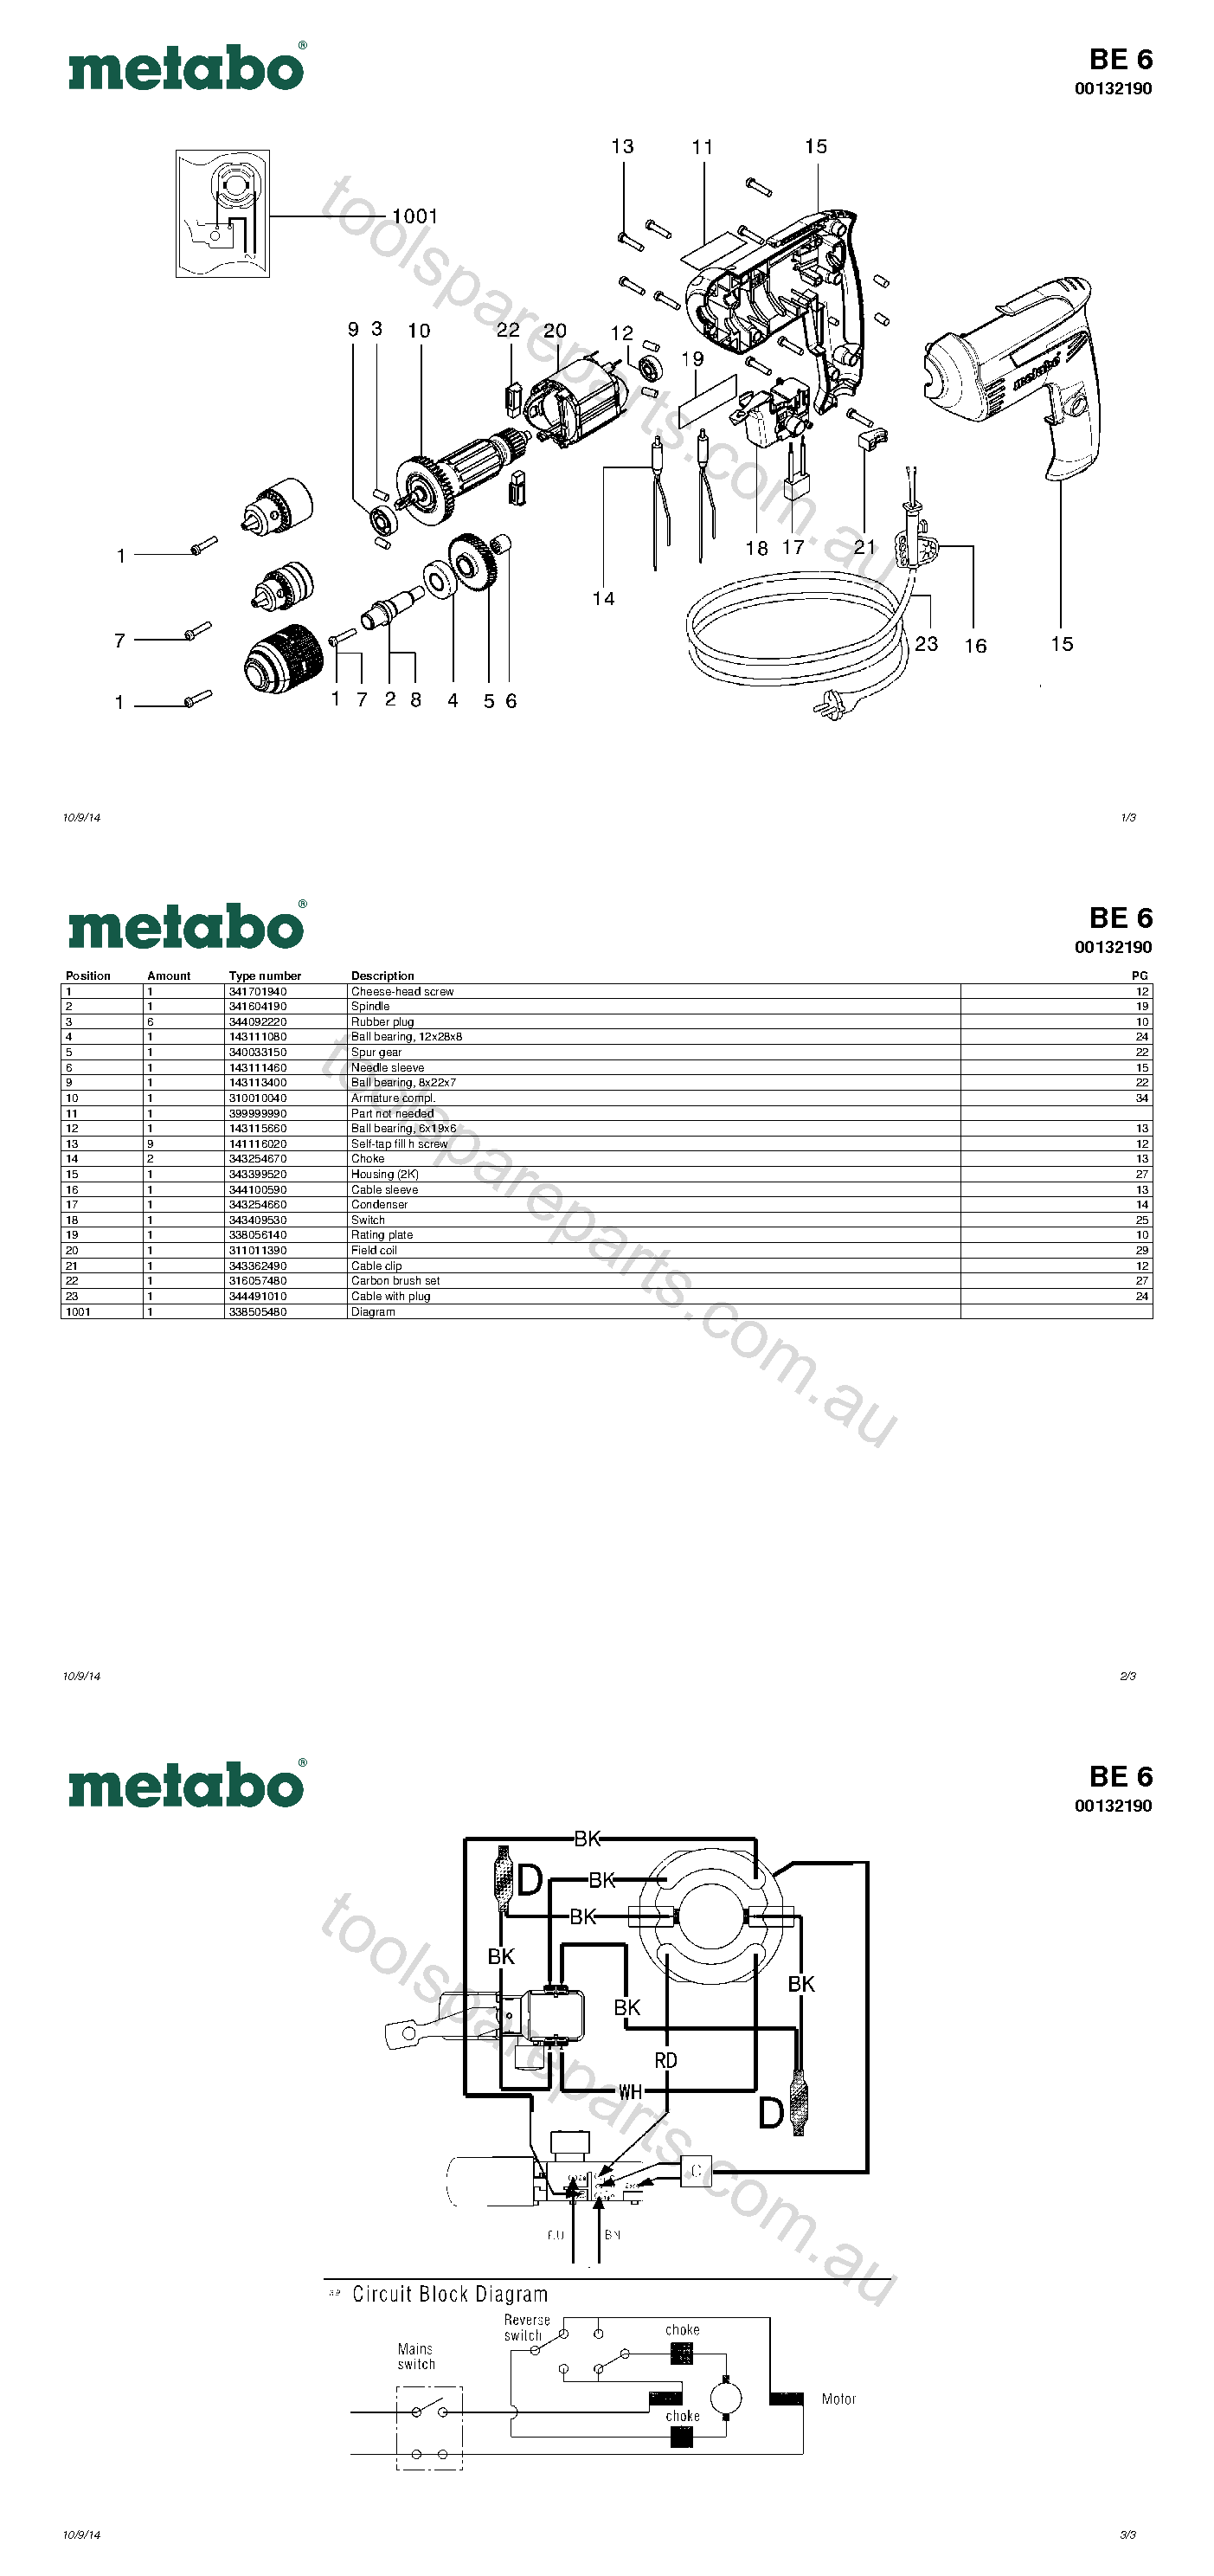 Metabo BE 6 00132190  Diagram 1